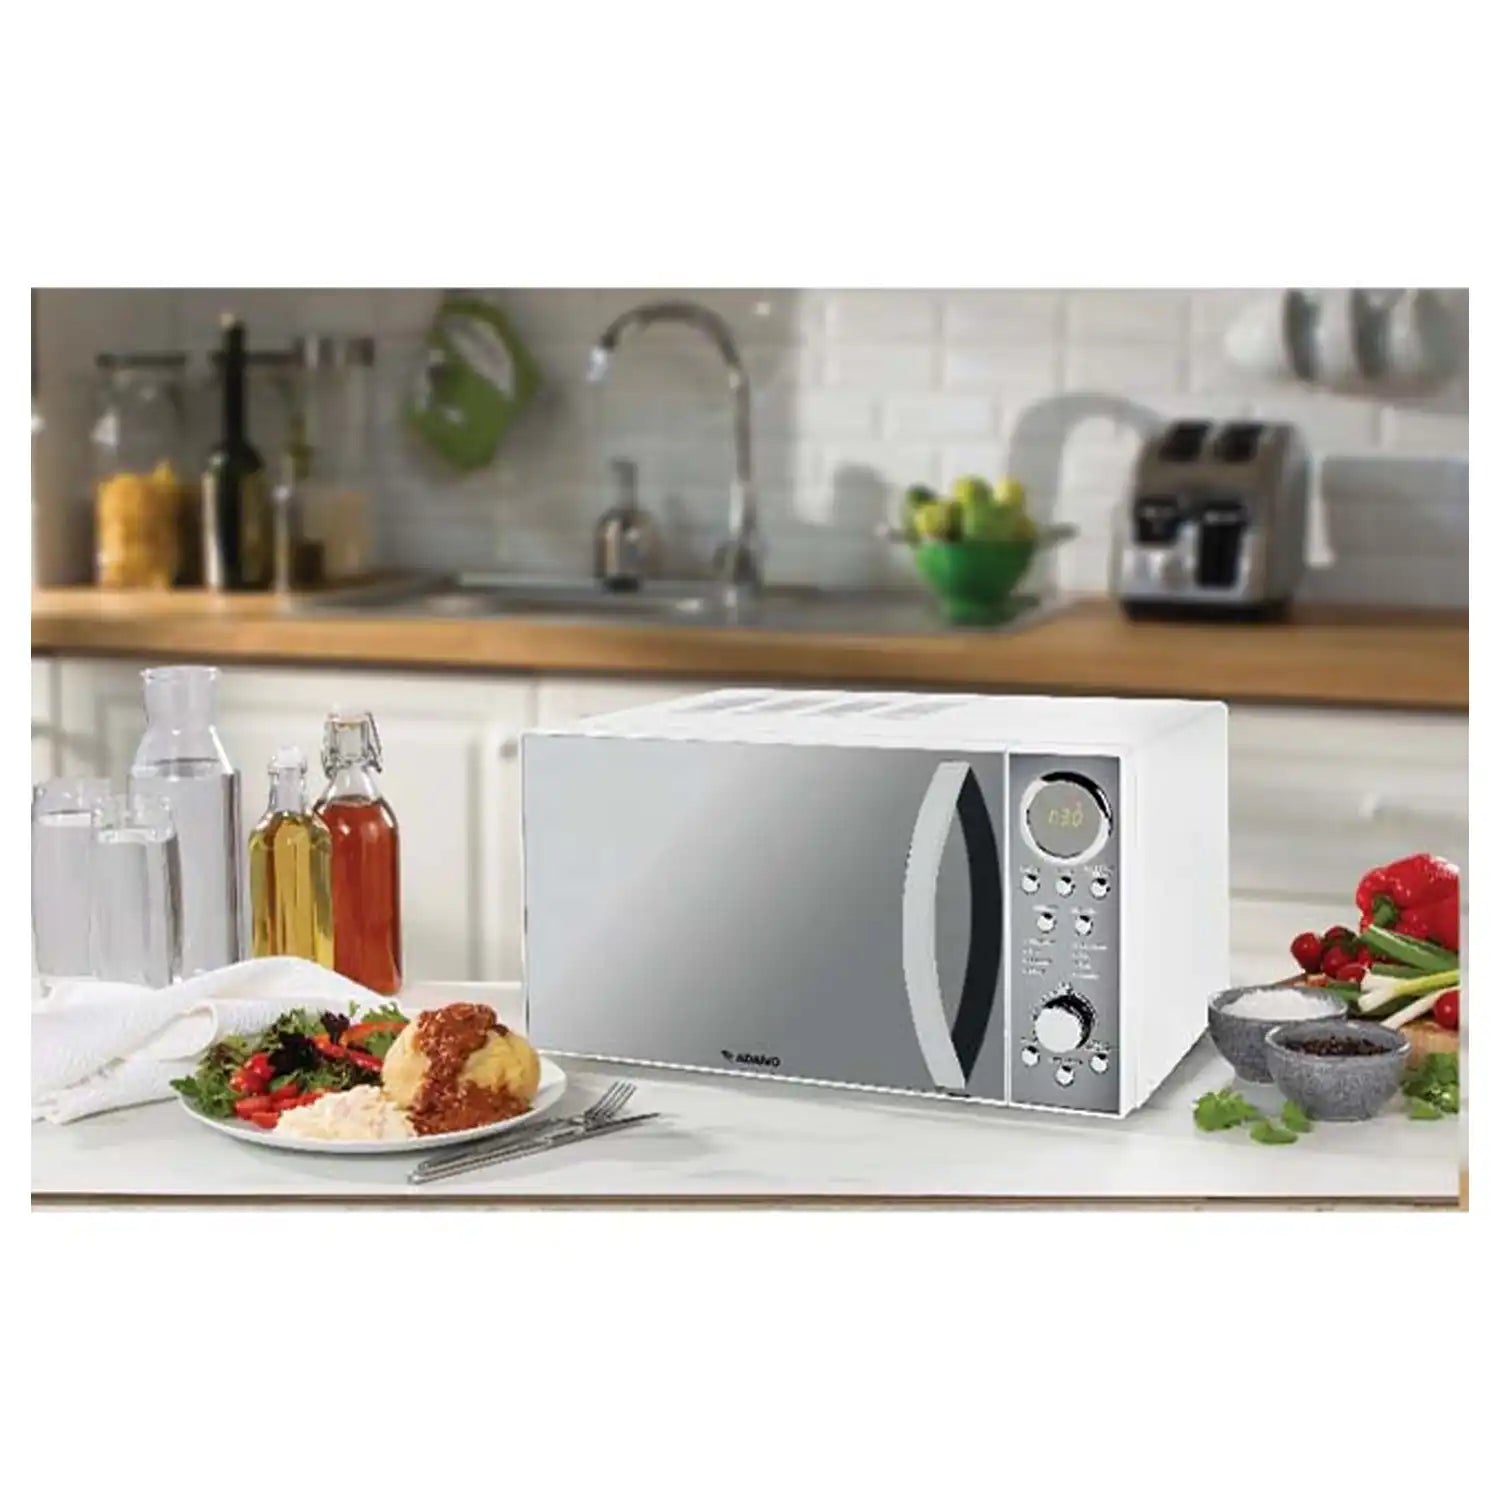 Adamo 20L Digital Microwave 700W - White 2 Shaws Department Stores